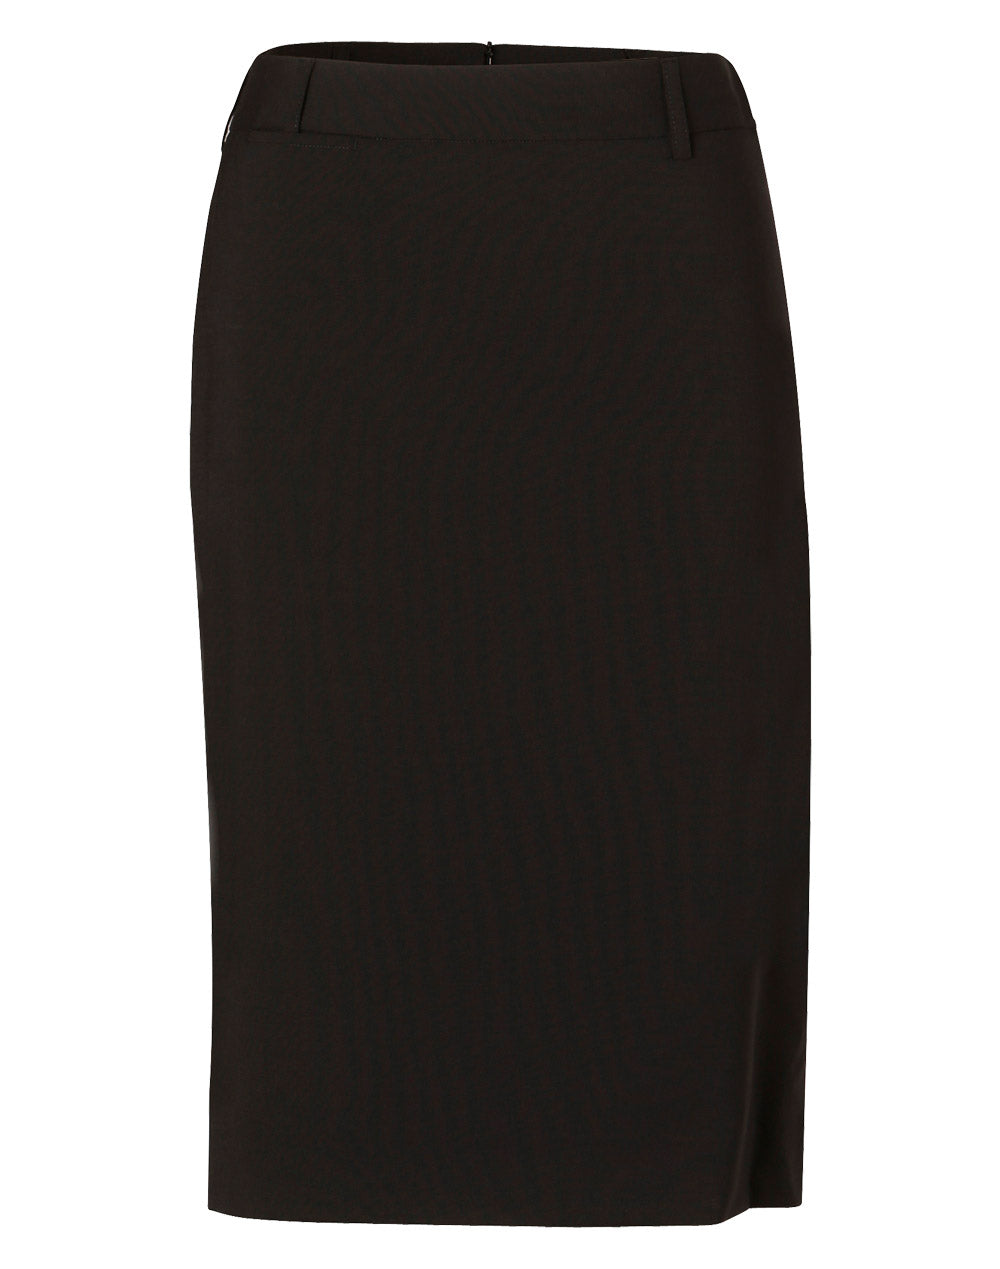 Winning Spirit-Women's Wool Stretch Mid Length Lined Pencil Skirt-M9470